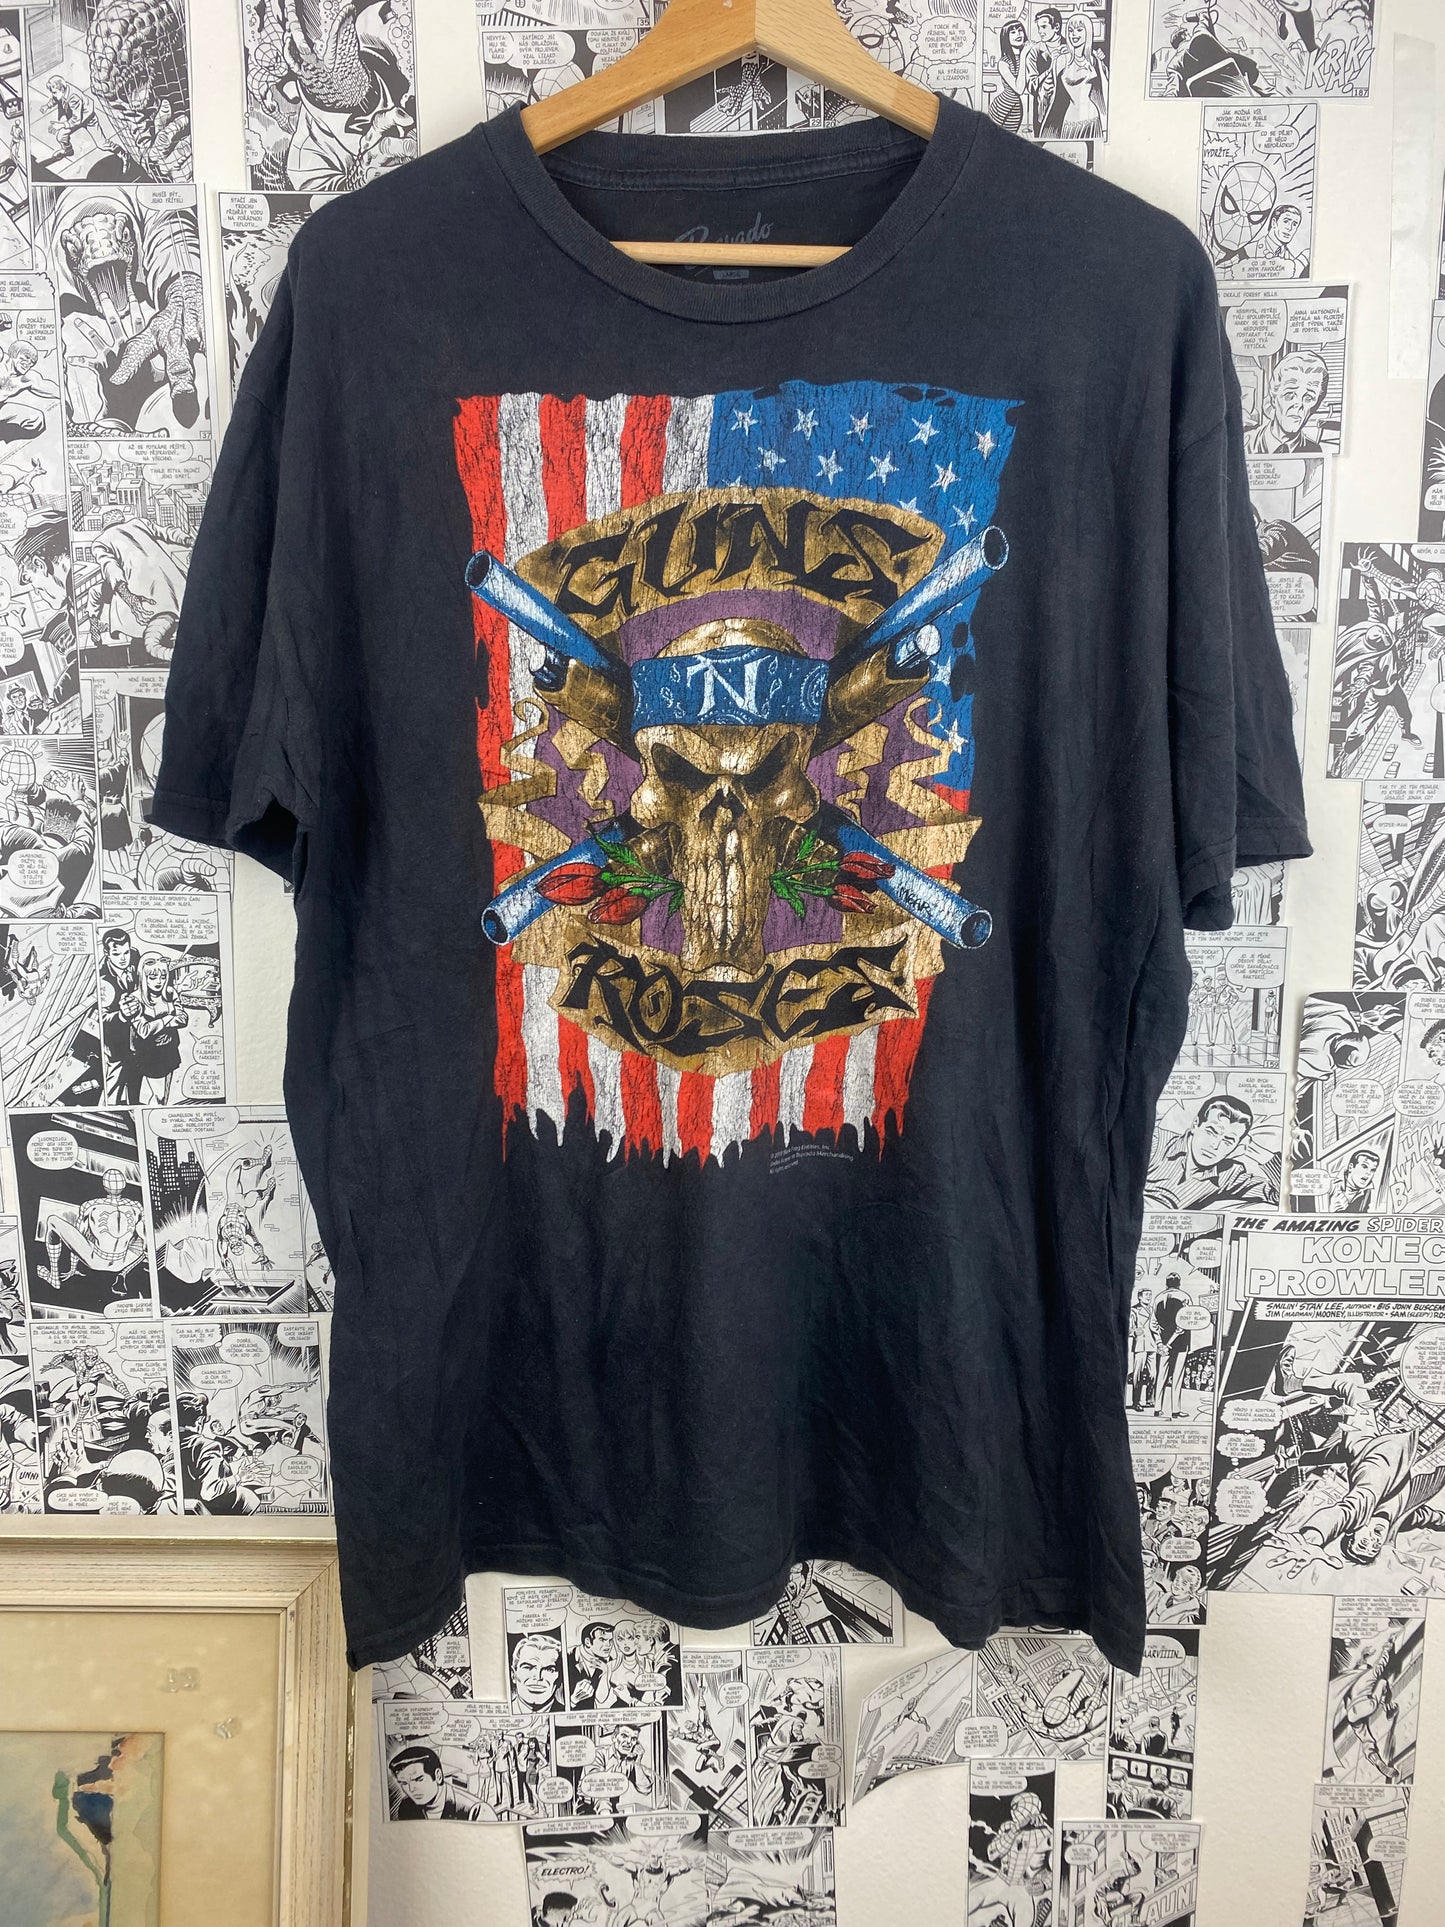 Vintage Guns N’ Roses 2010 t-shirt - size L